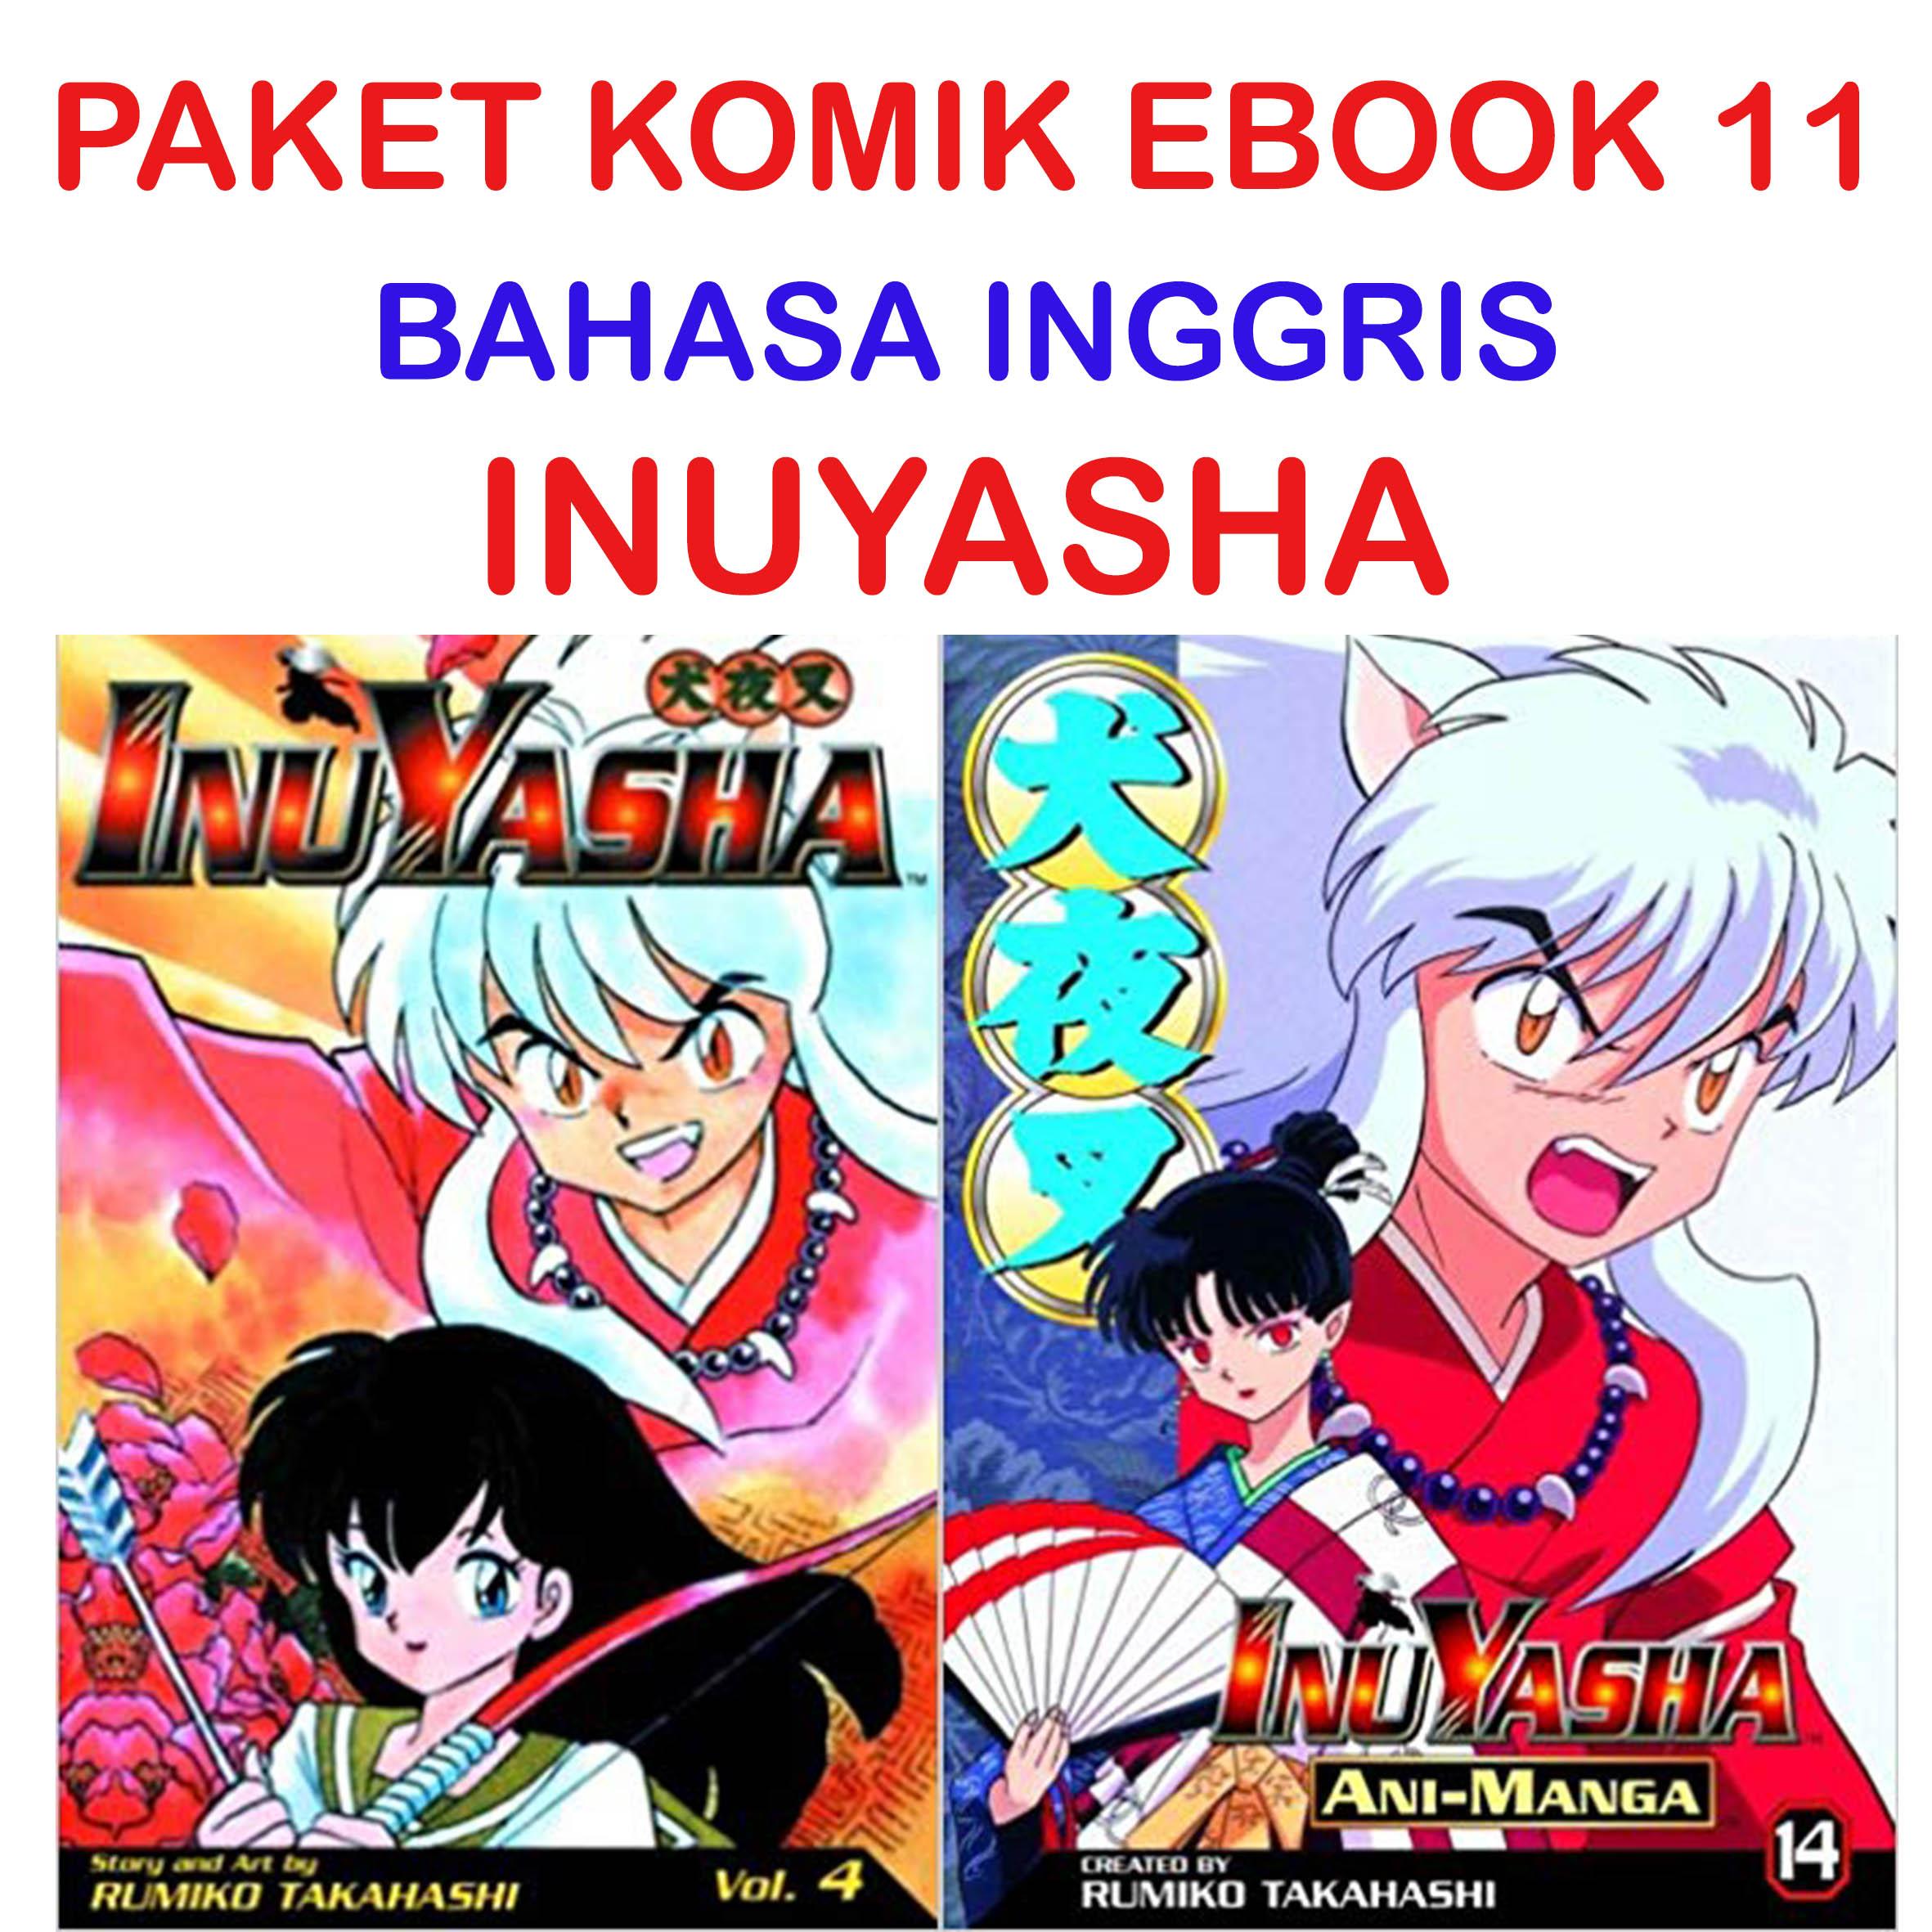 download ebook dragon ball bahasa indonesia